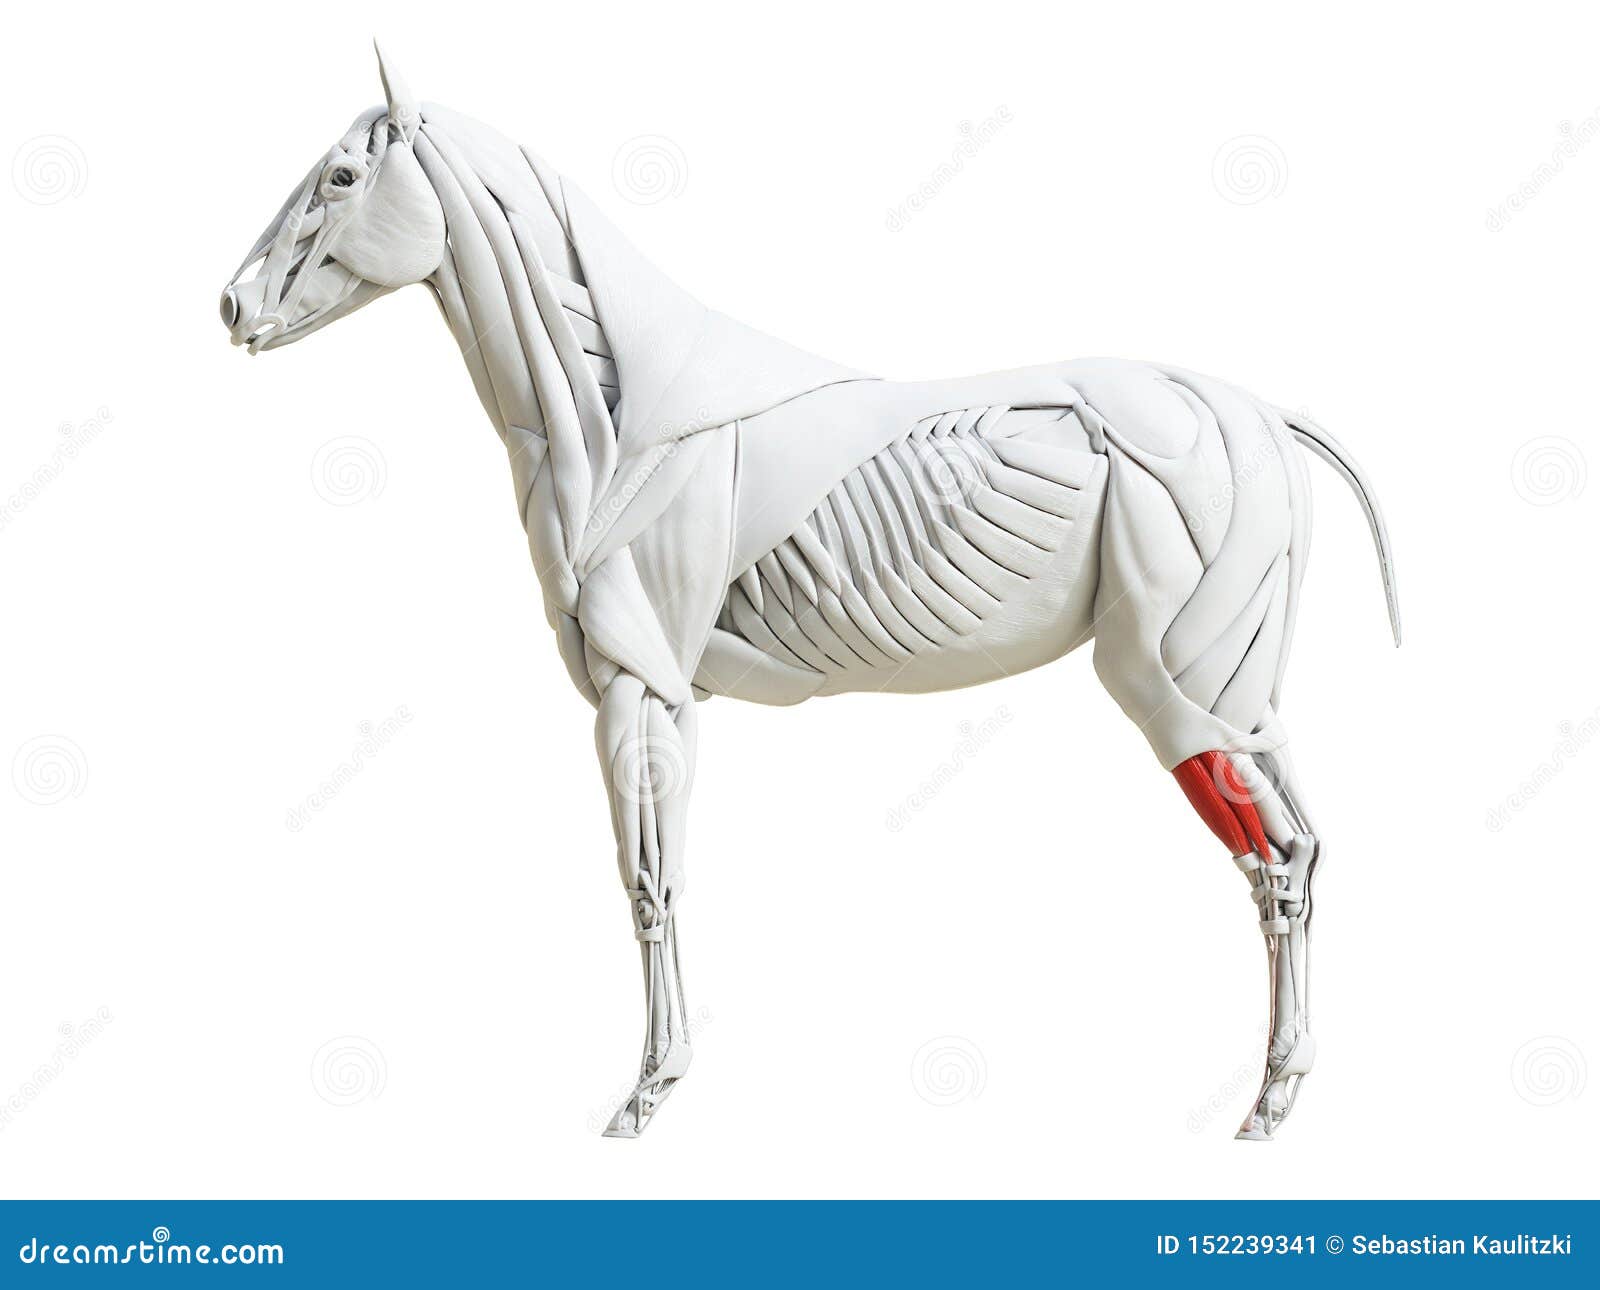 the equine muscle anatomy - extensor digitorum longus